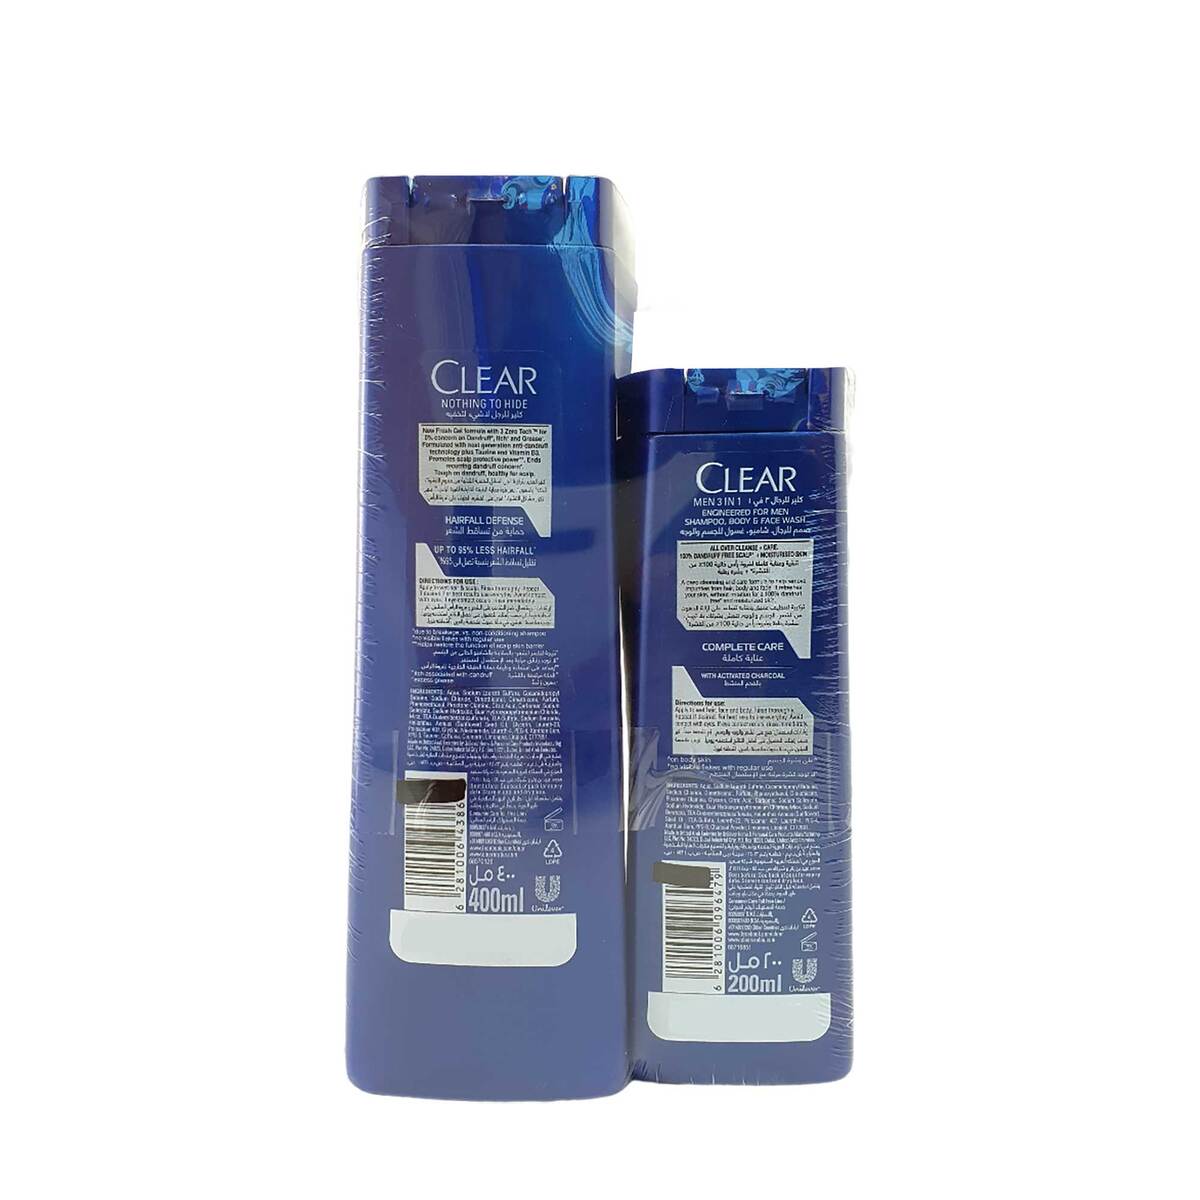 Clear Men's Hair Fall Defence Anti-Dandruff Shampoo 400ml + 200ml Assorted